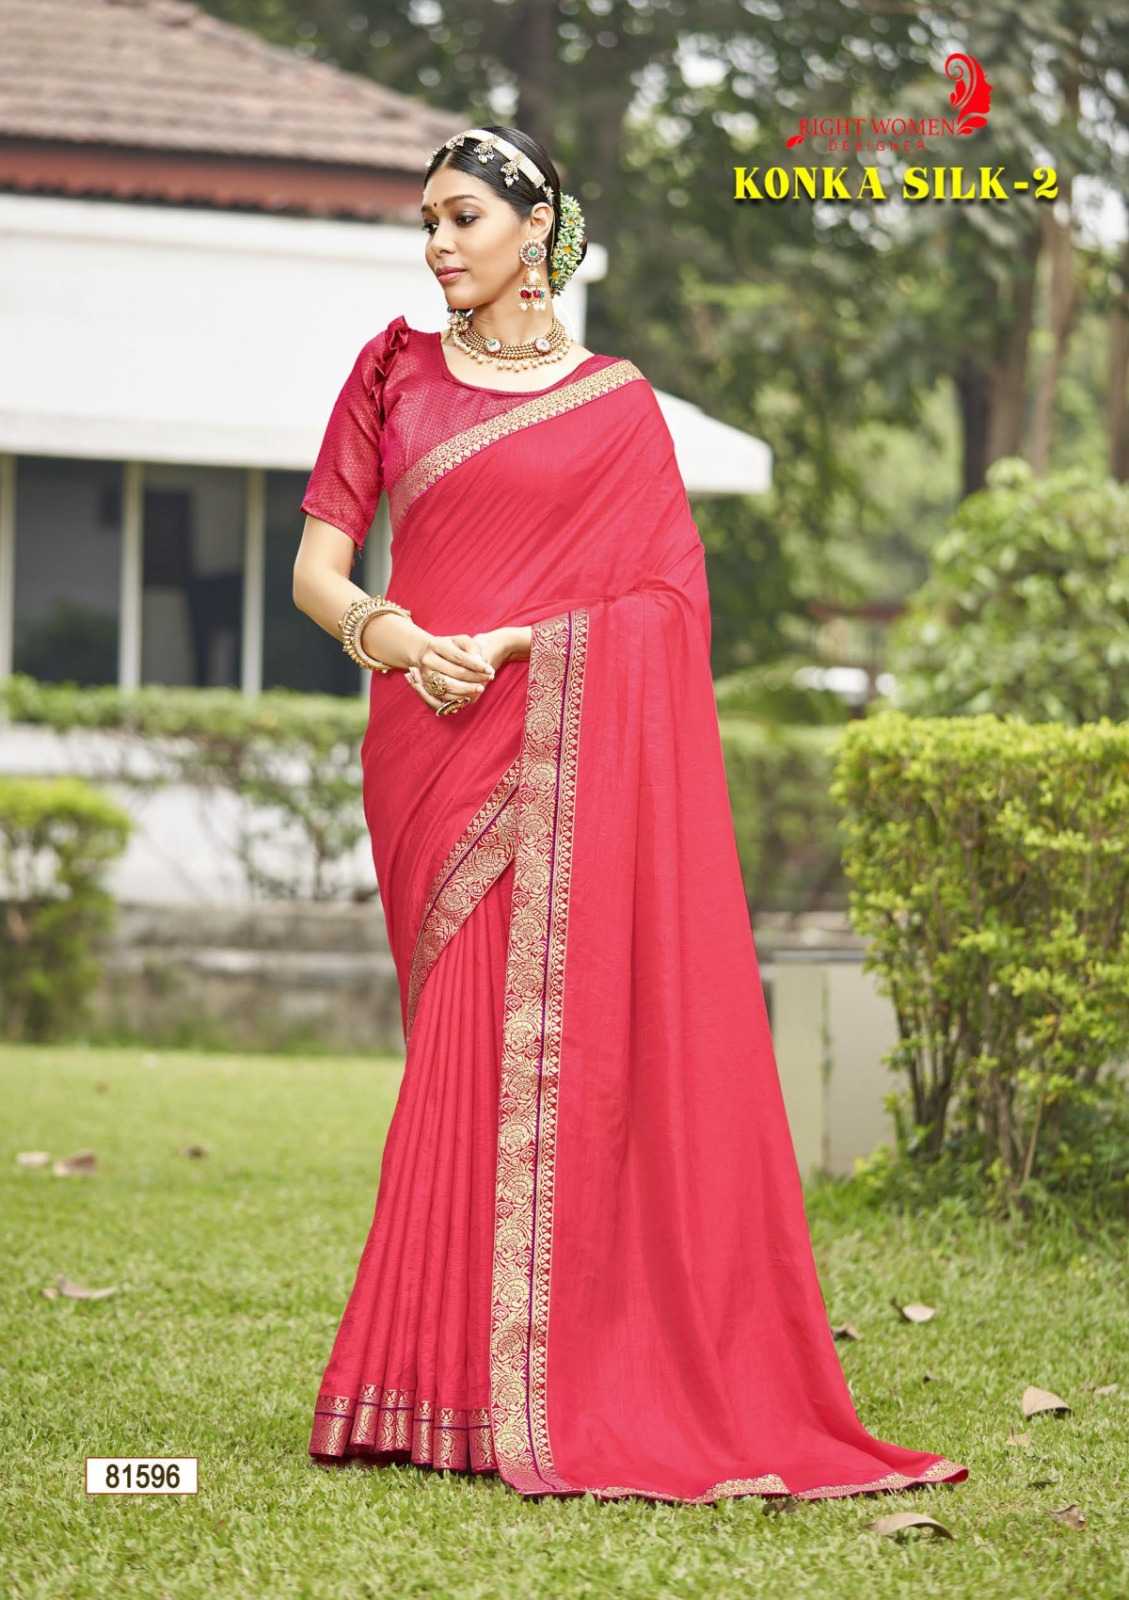 right women designer konka silk vol 2  81591-81598 fancy vichitra saree exports